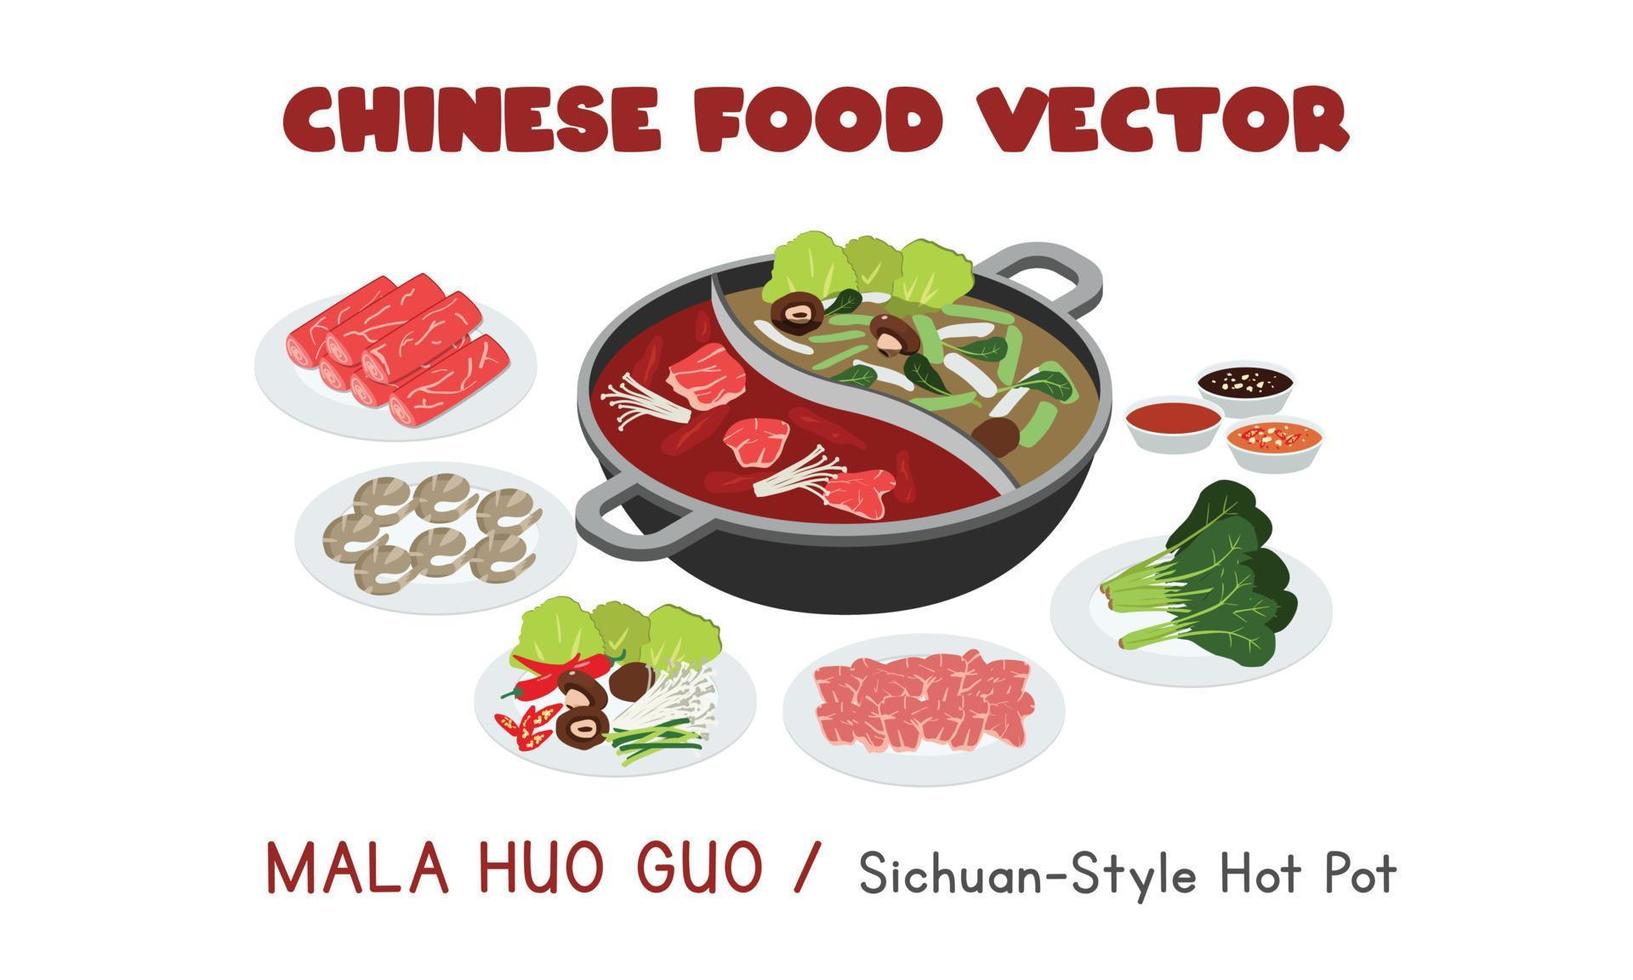 Chinese mala hoezo guo - sichuan-stijl heet pot vlak vector ontwerp illustratie, clip art tekenfilm stijl. Aziatisch voedsel. Chinese keuken. Chinese voedsel